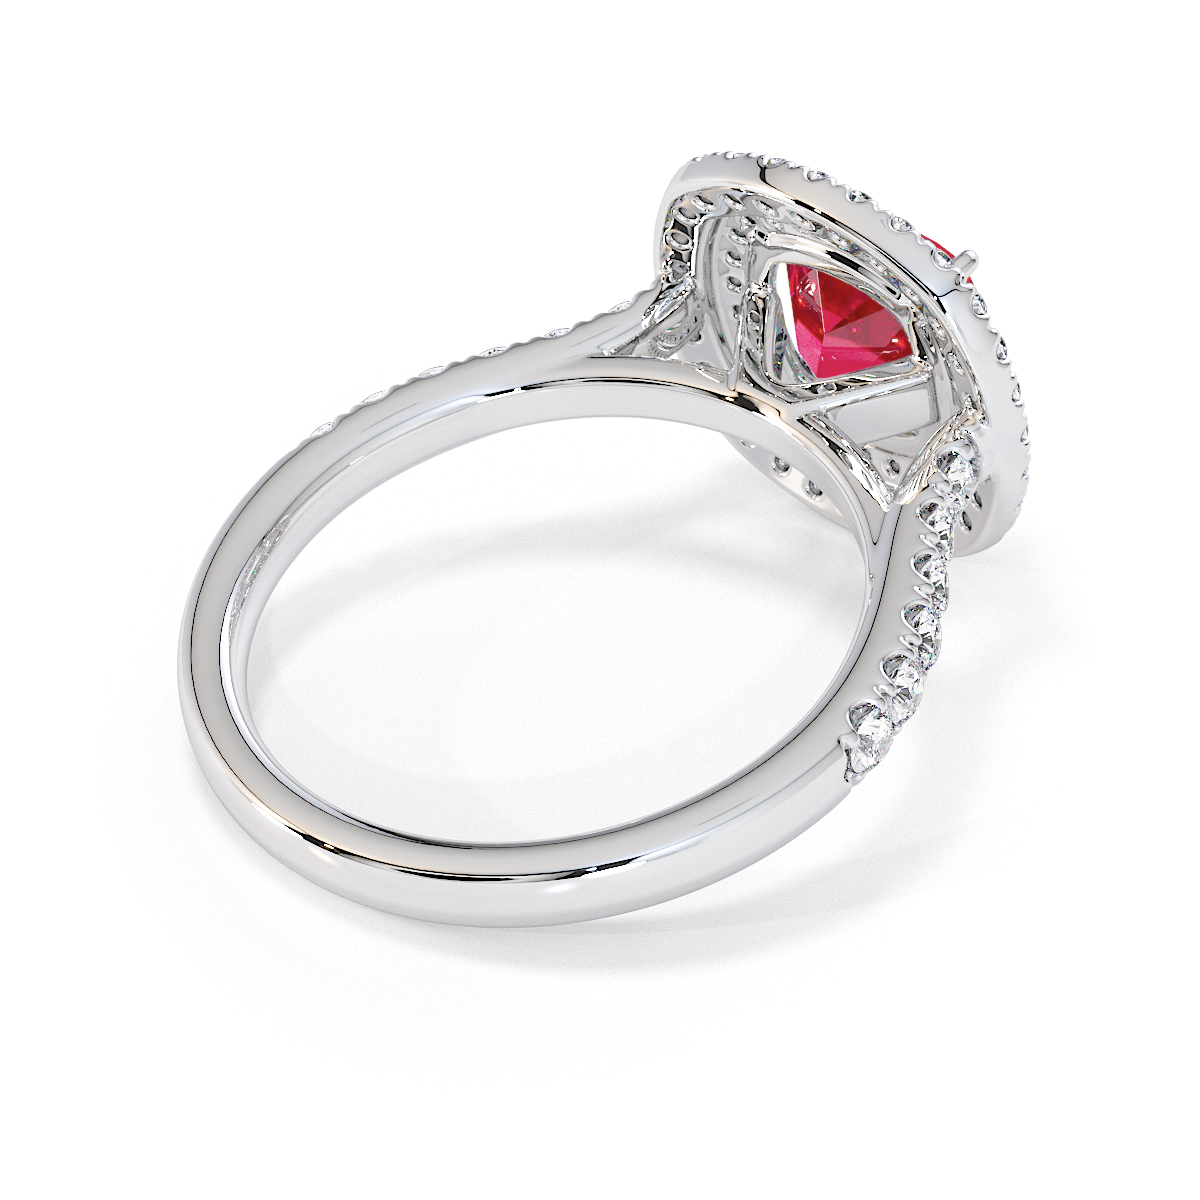 Gold / Platinum Ruby and Diamond Engagement Ring RZ3405